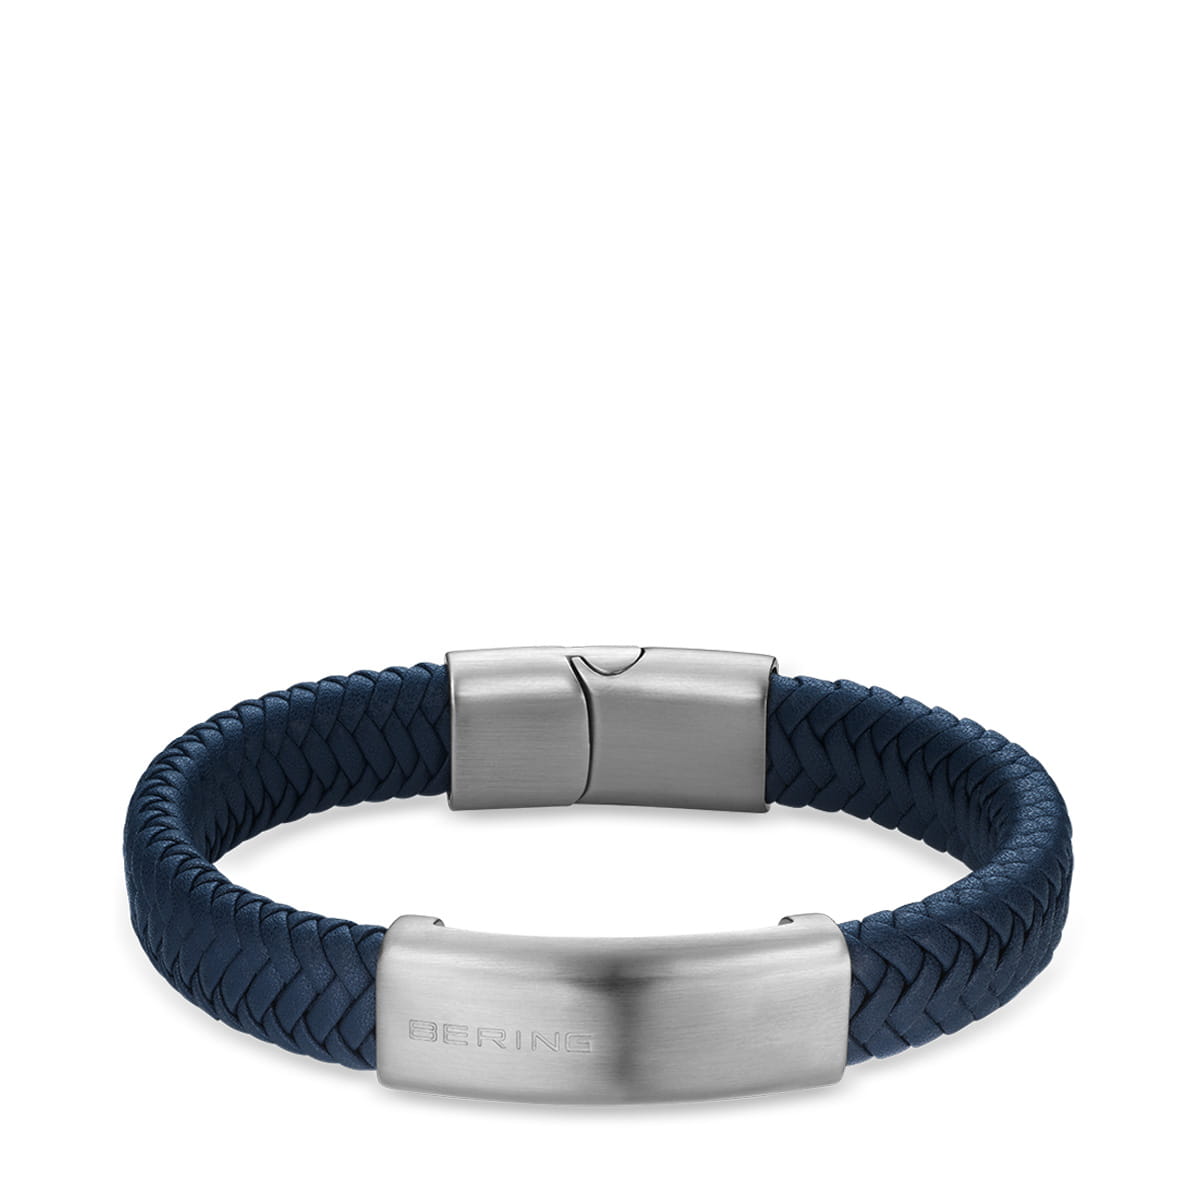 Bering Armband Edelstahl Leder Blau 637-817-X0